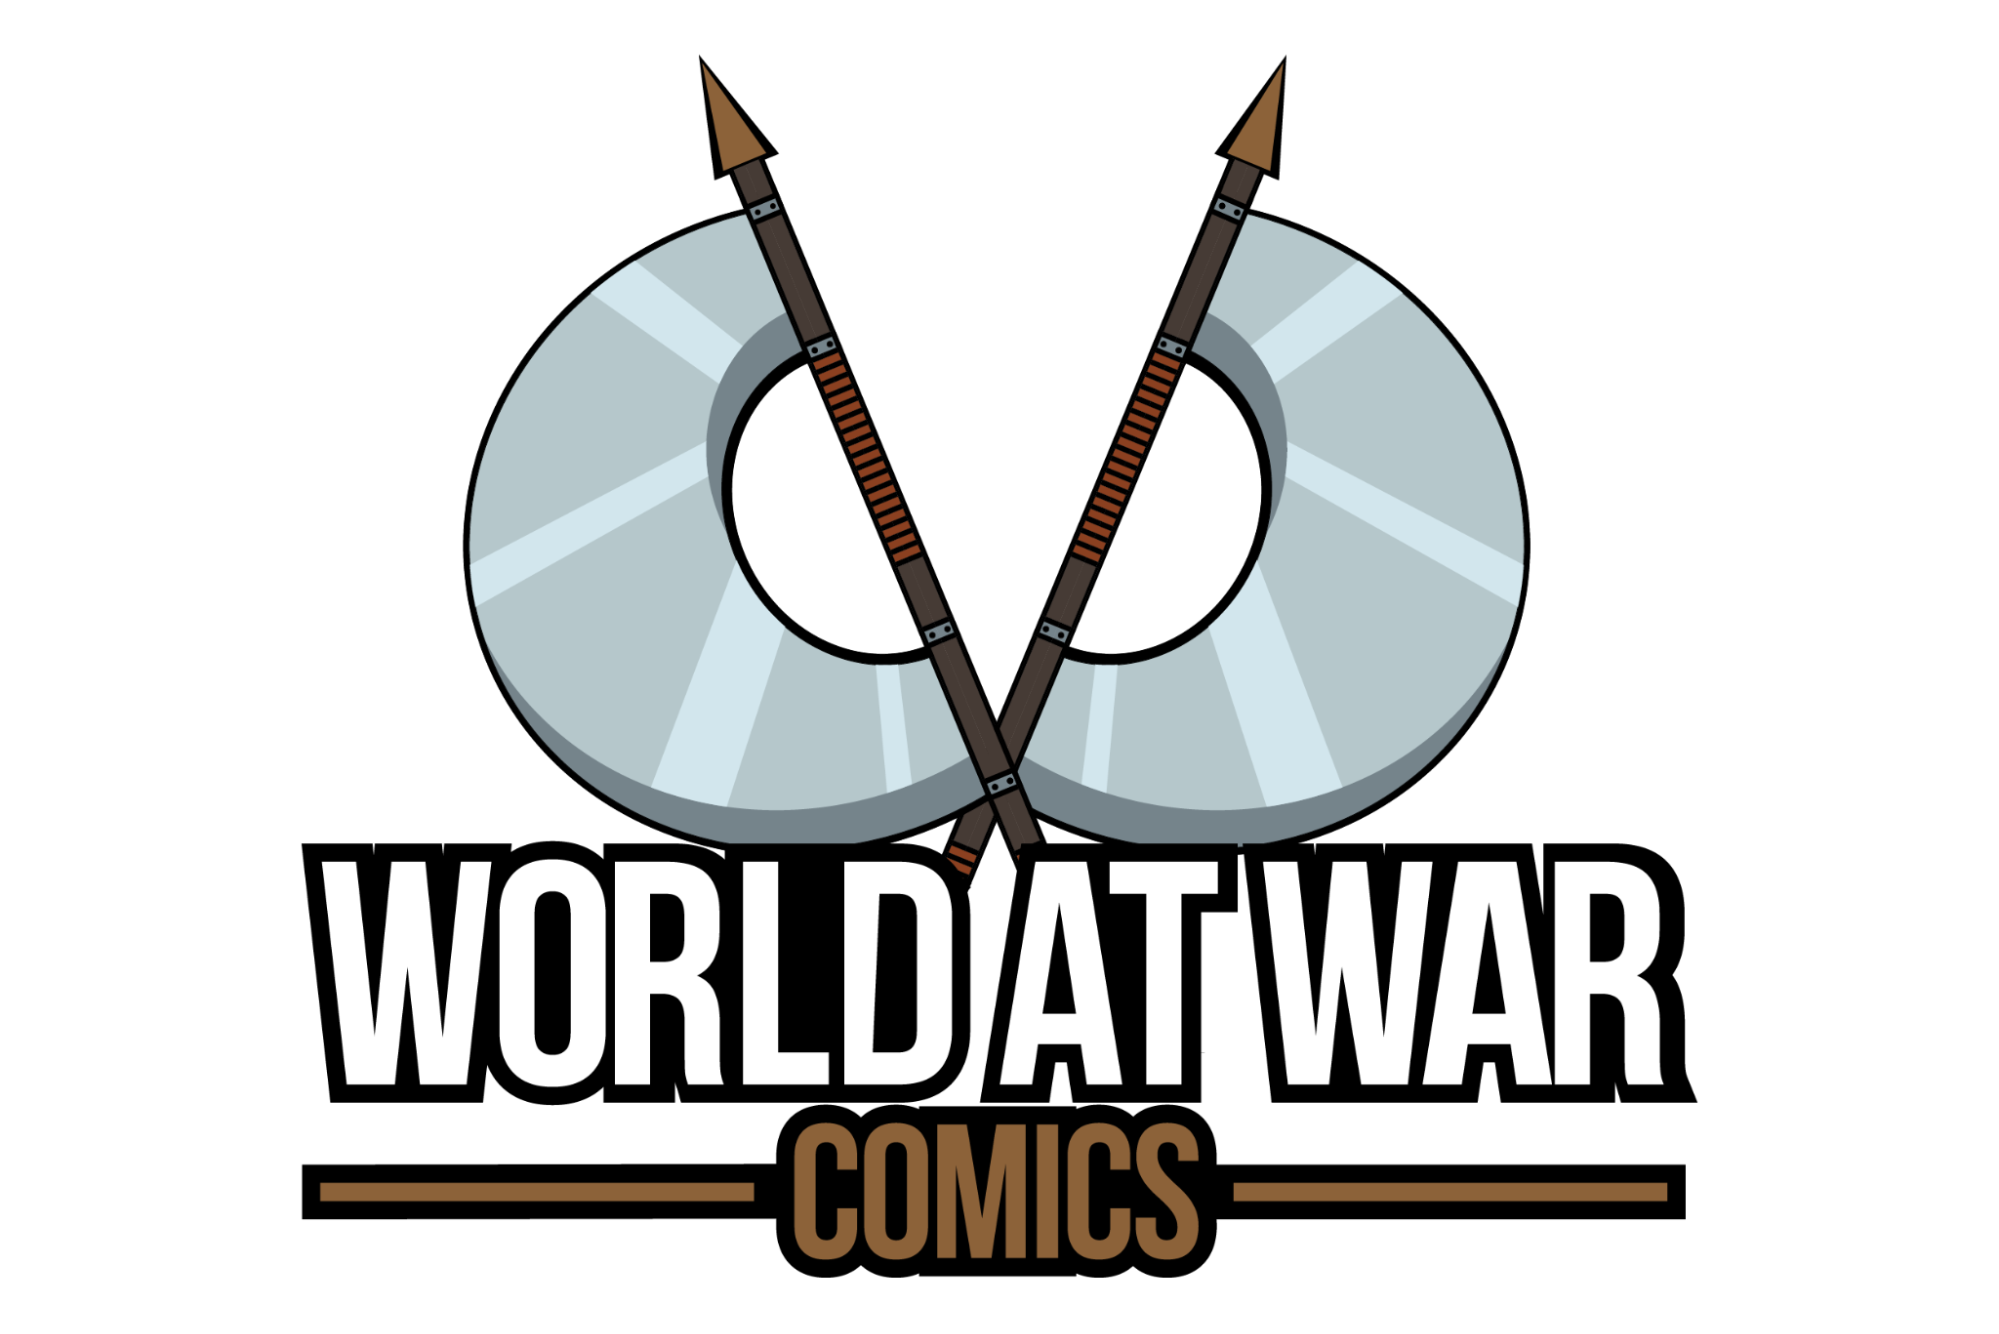 World at war comics